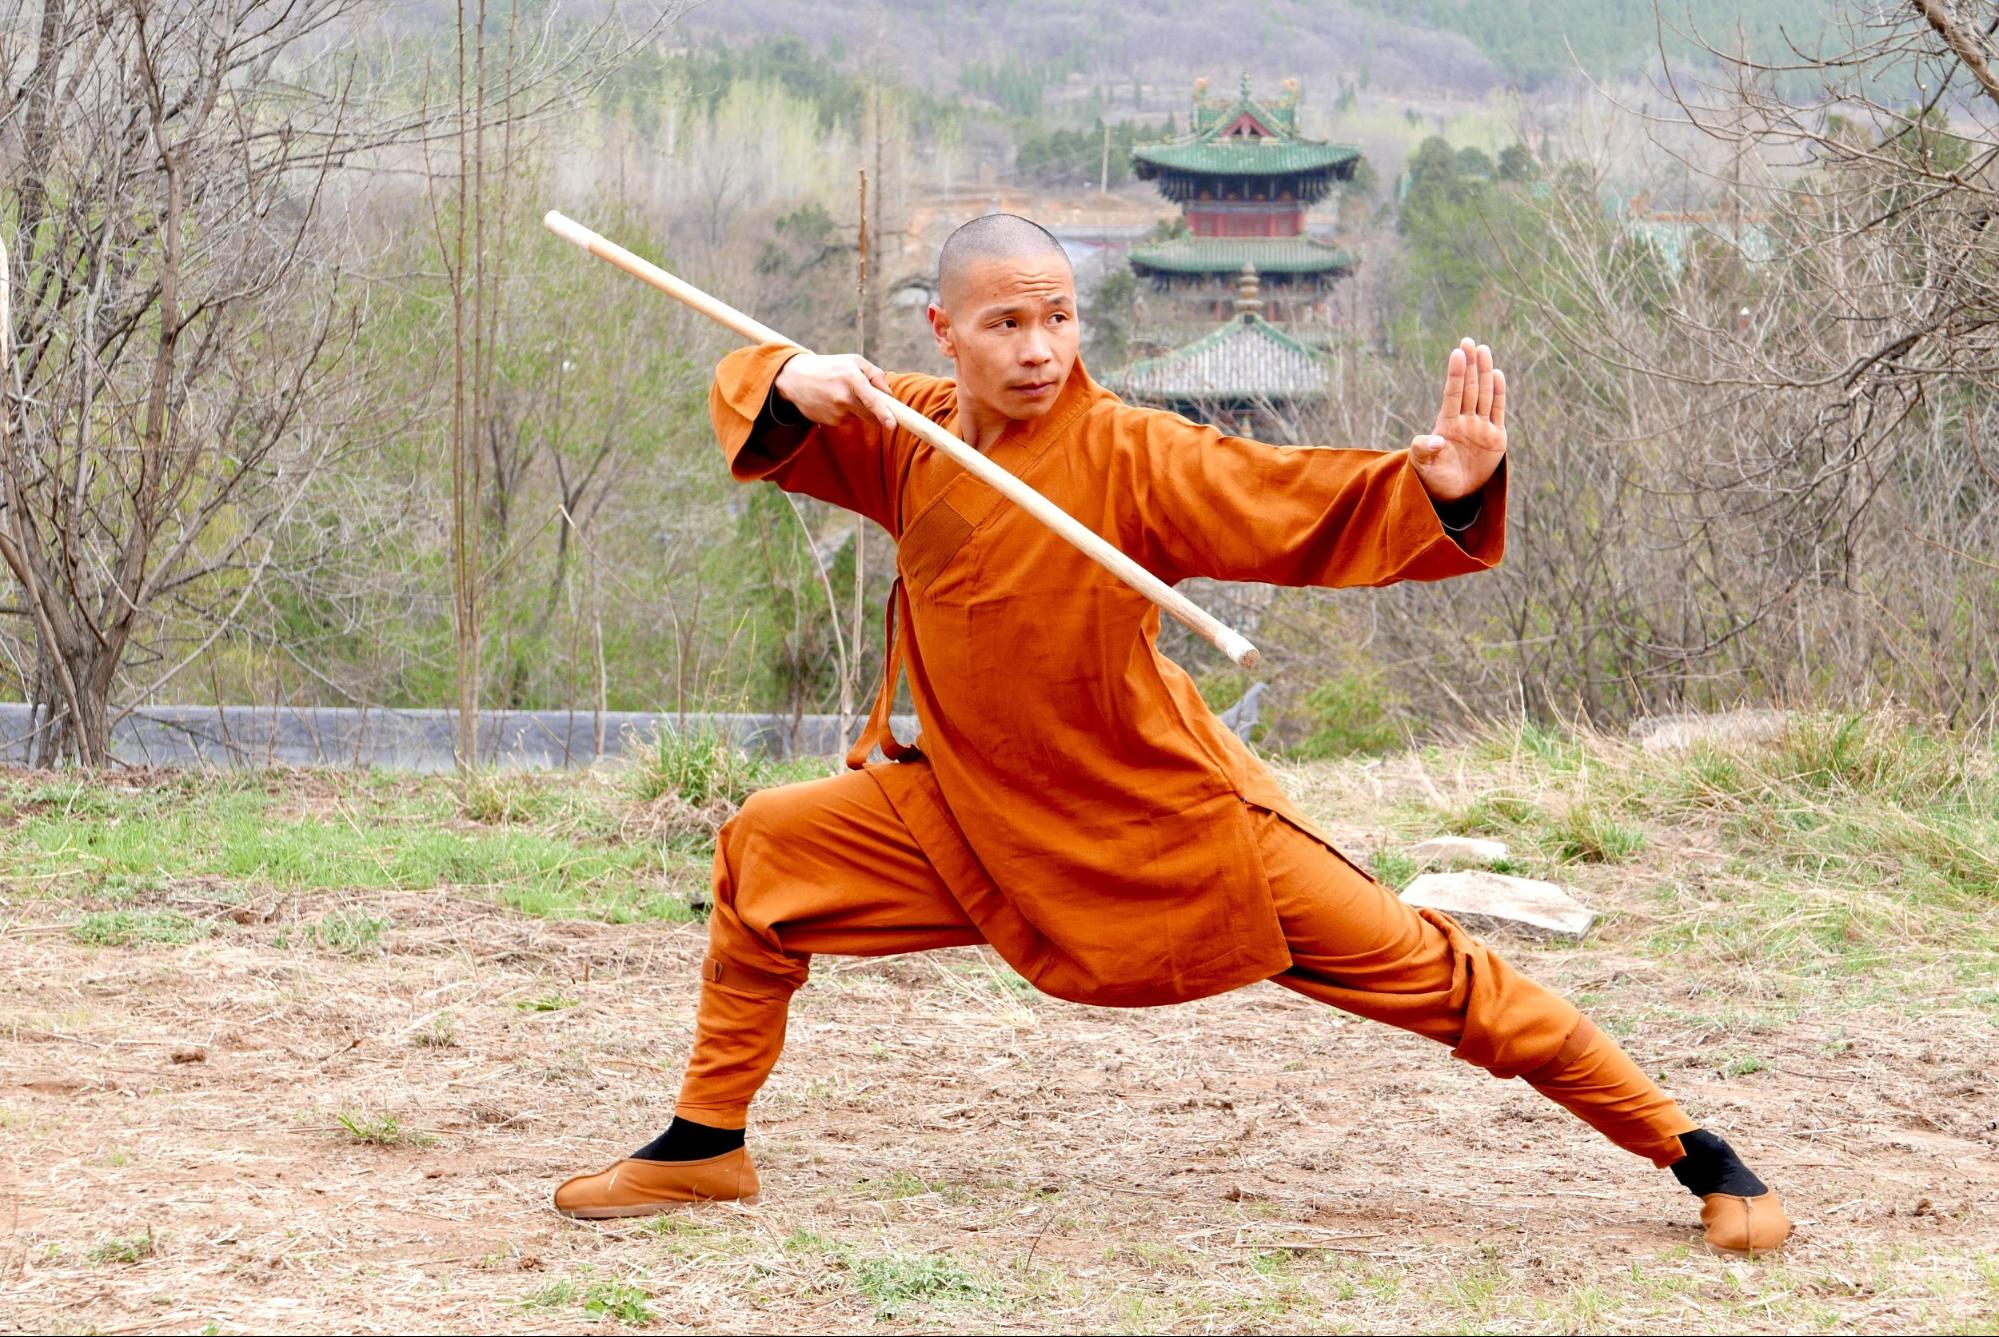 Shaolin warrior